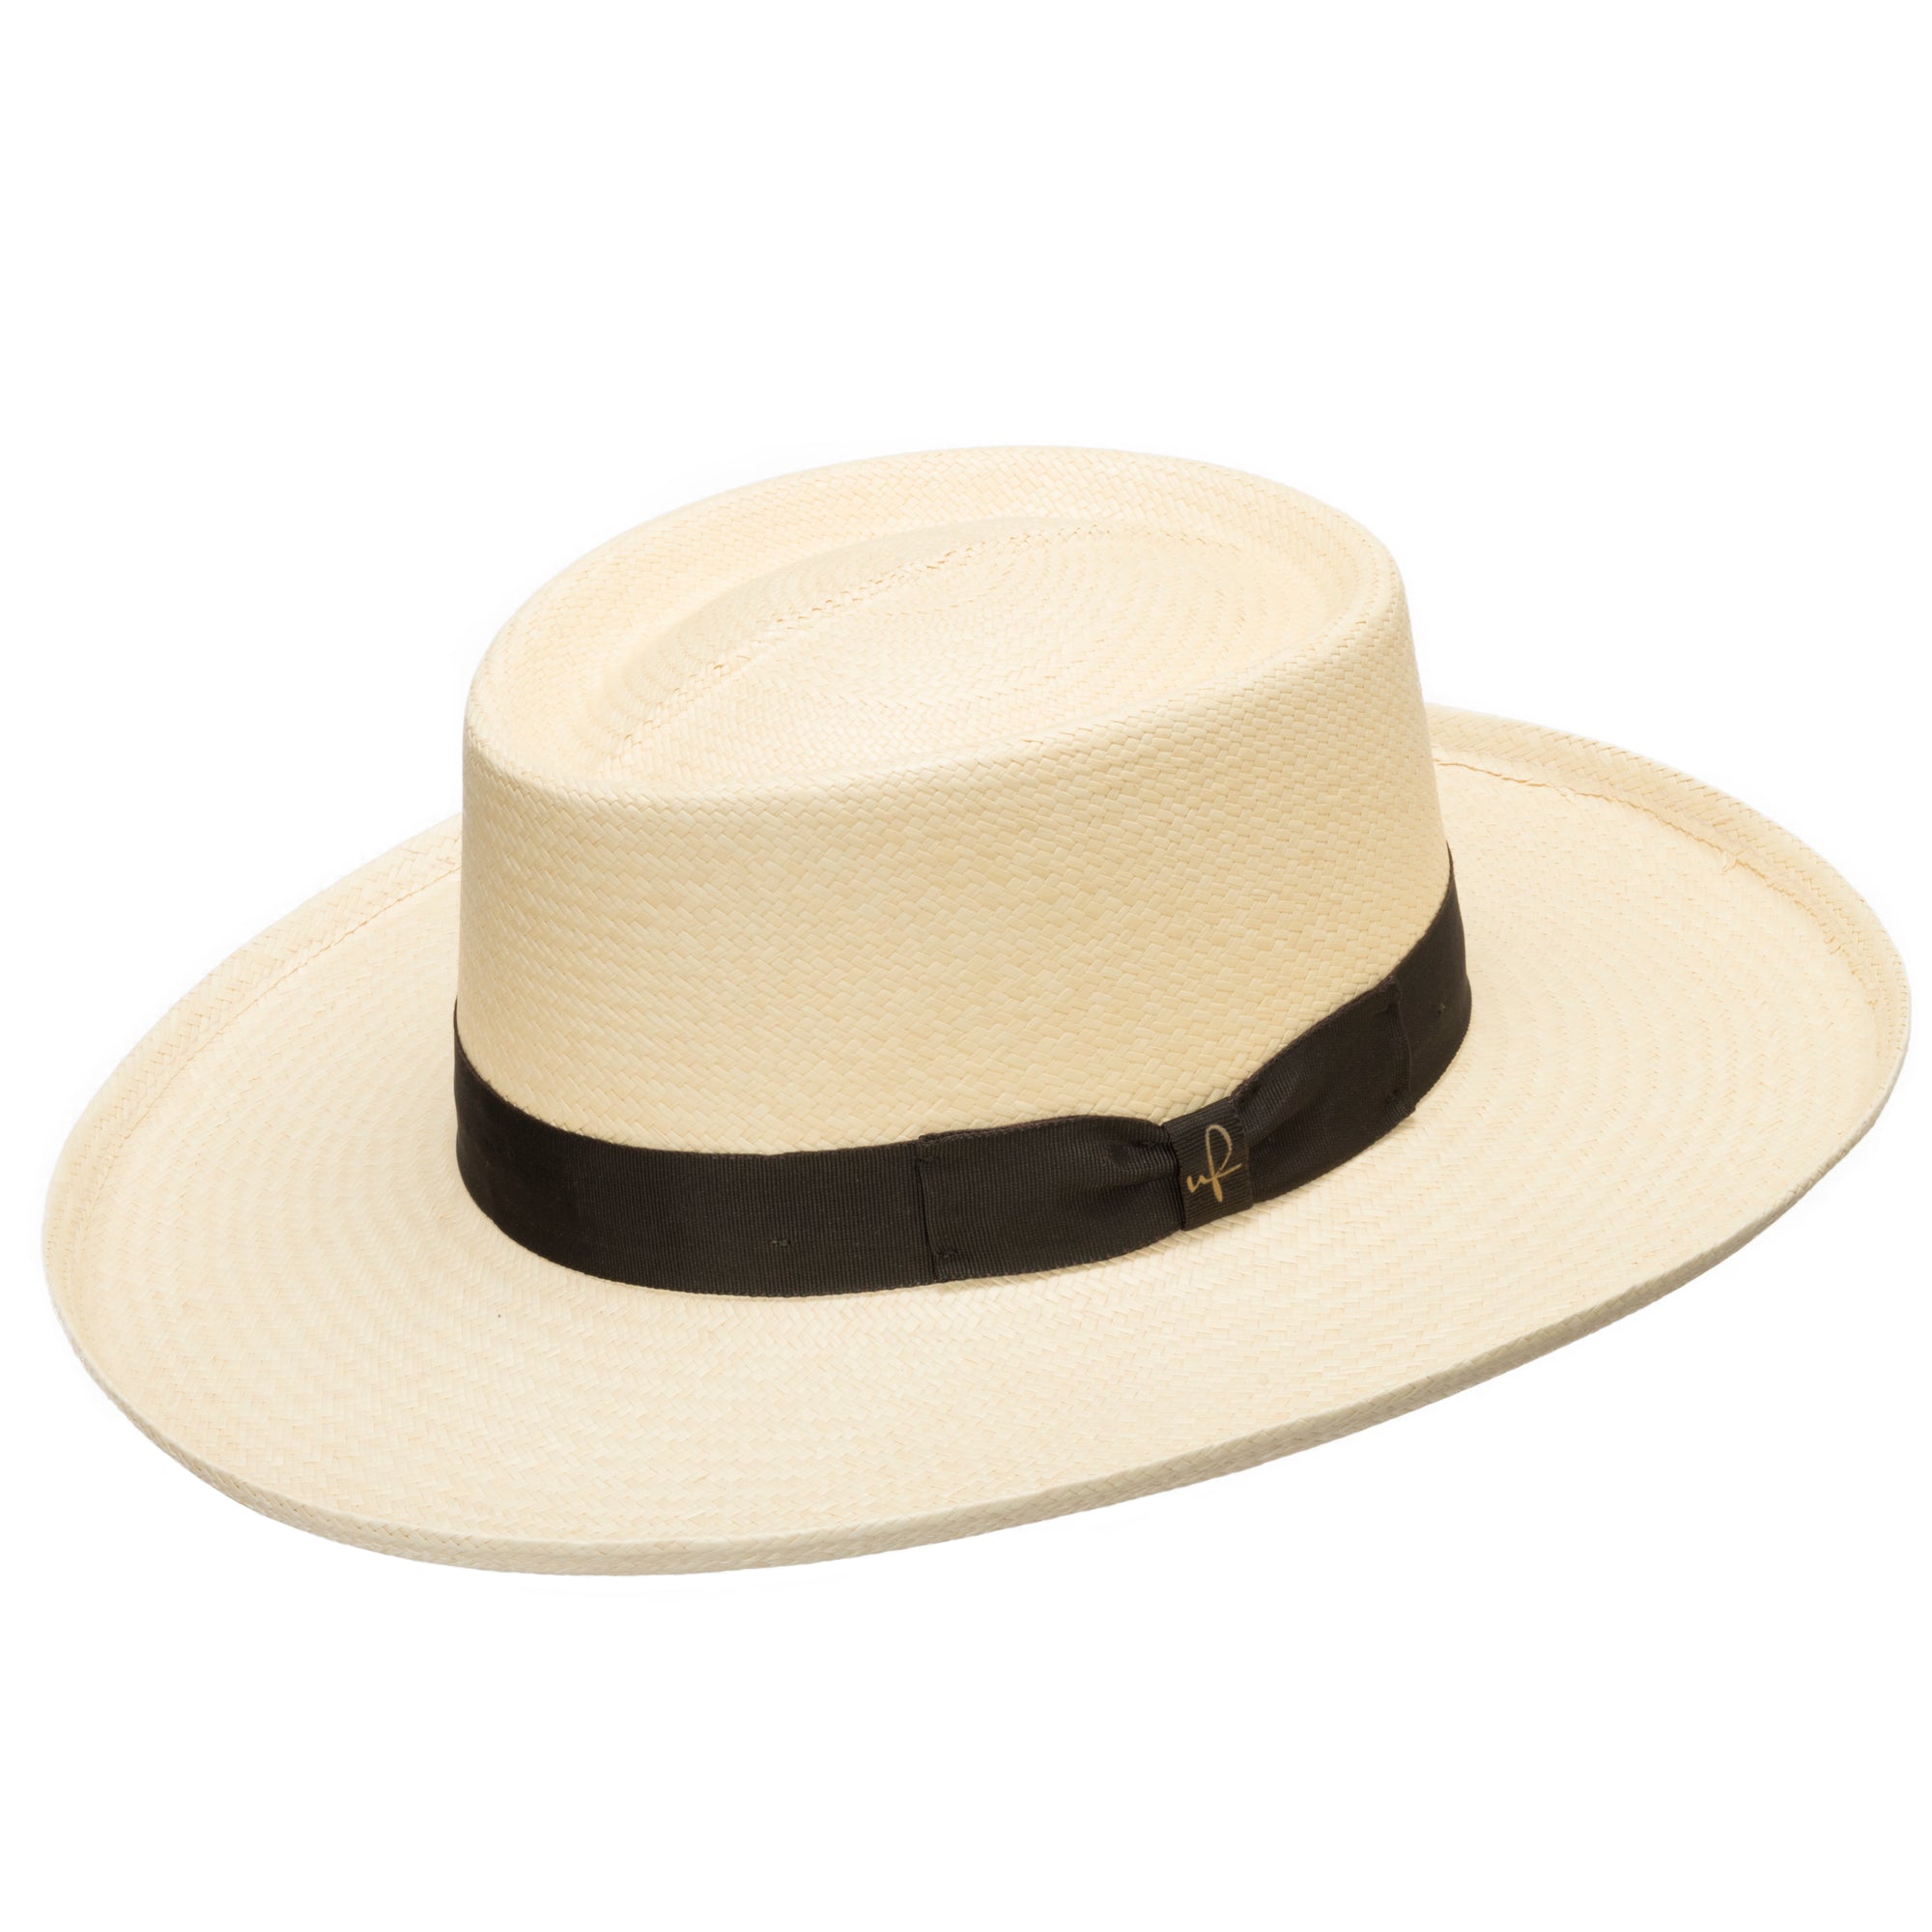 Stylish & Sun Protective Women's Straw Hats Page 5 - Ultrafino